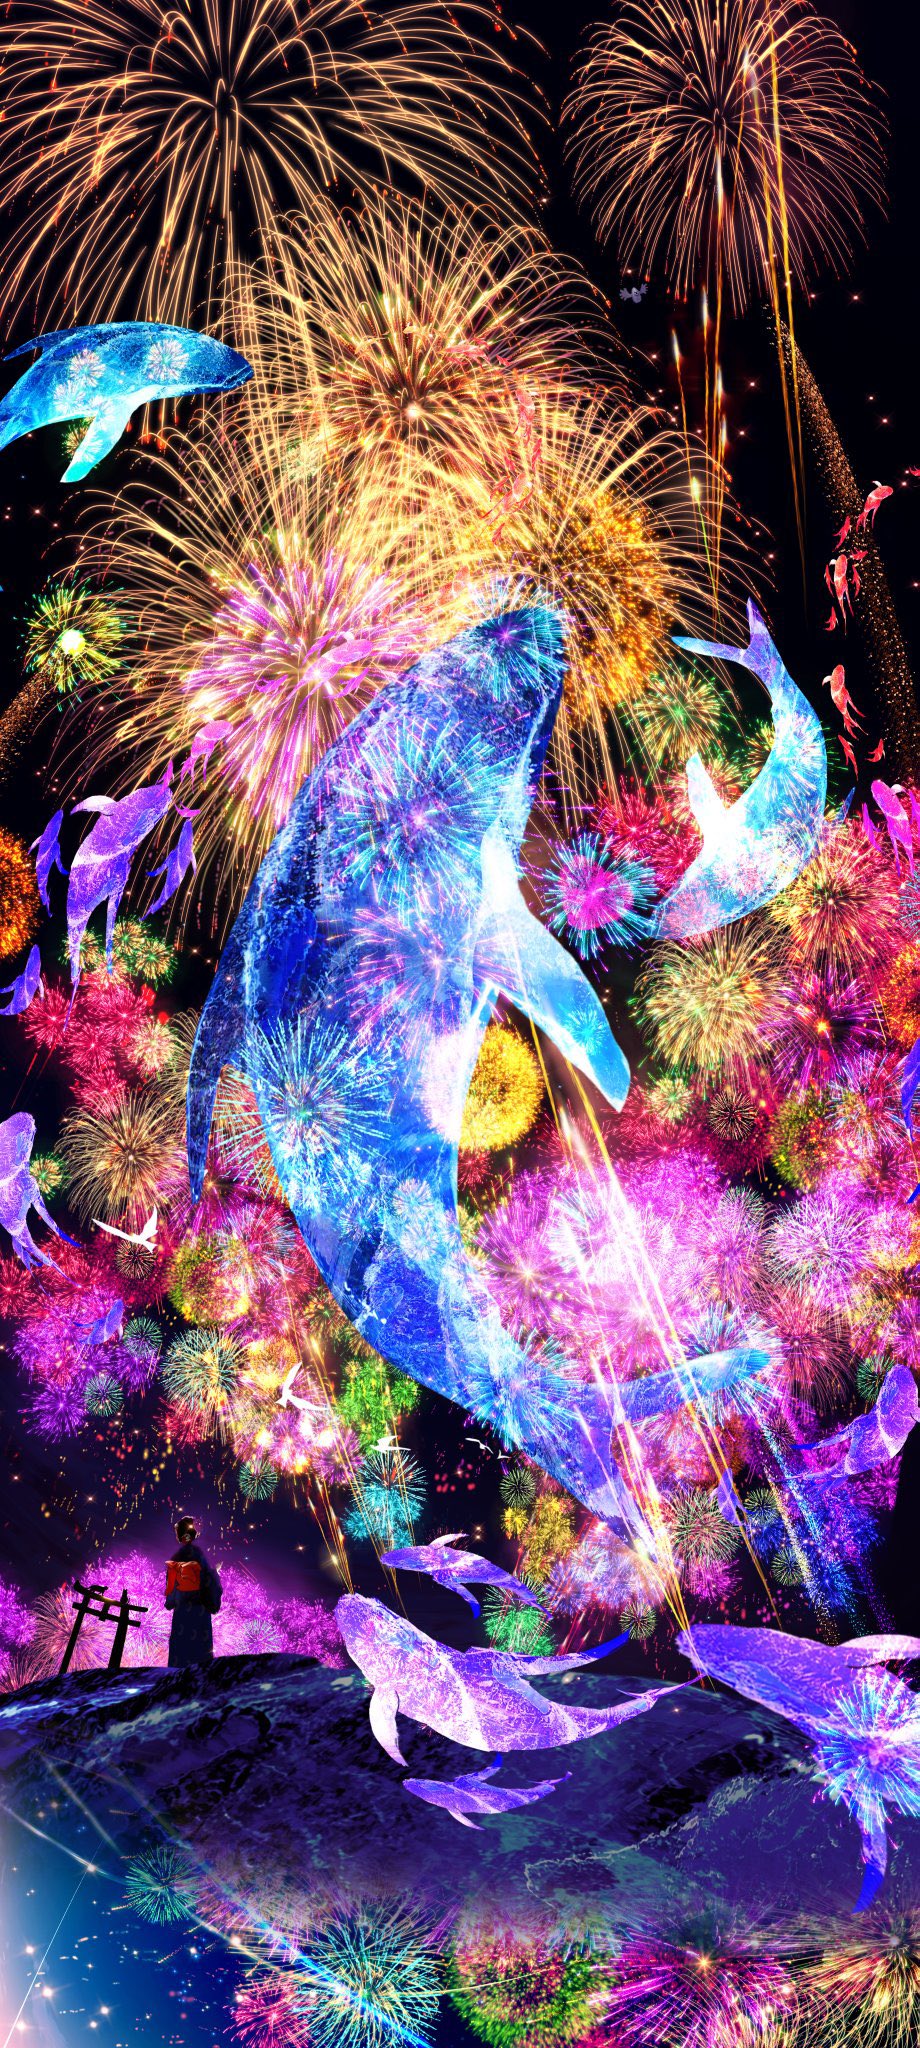 Anime 920x2048 anime anime girls portrait display fireworks whale animals sky night torii standing kimono flying whales